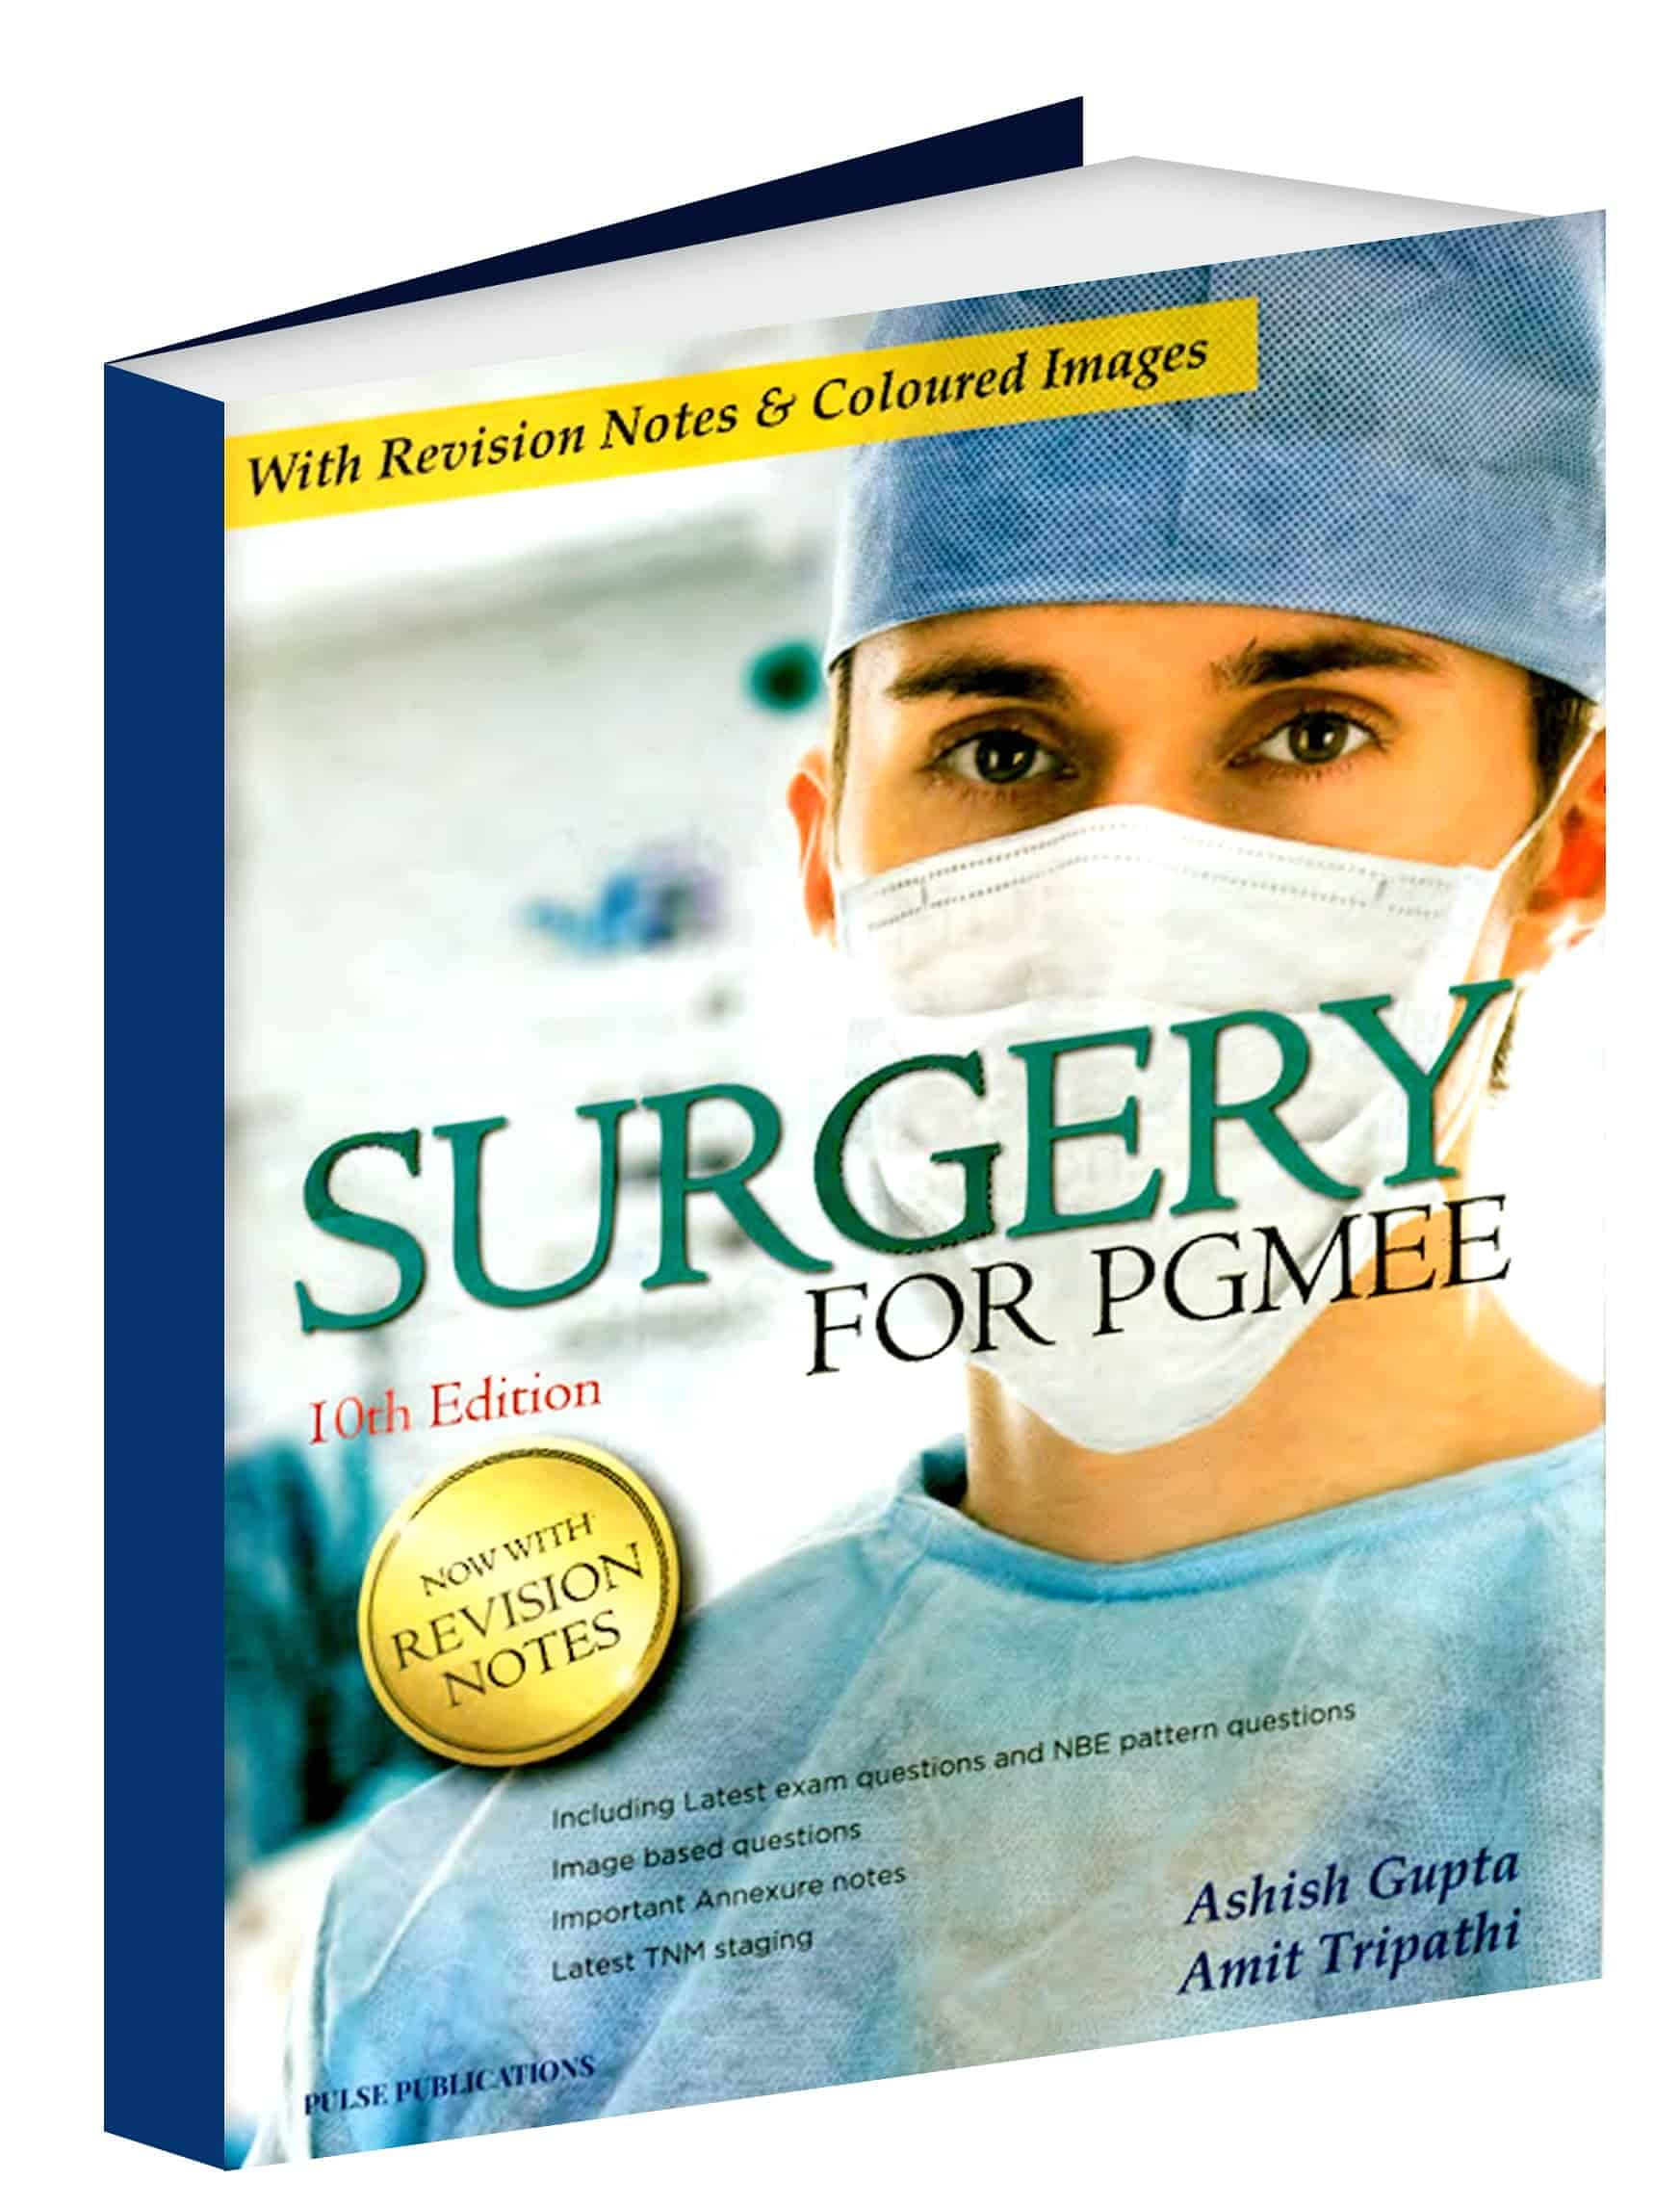 Surgery for PGMEE by Ashish Gupta & Amit Tripathi